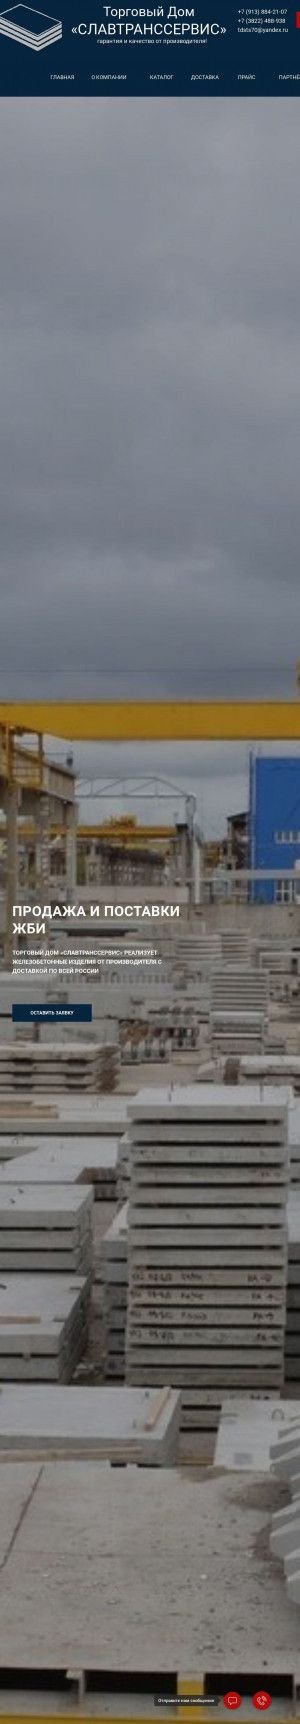 Предпросмотр для www.tdsts70.ru — СлавТрансСервис